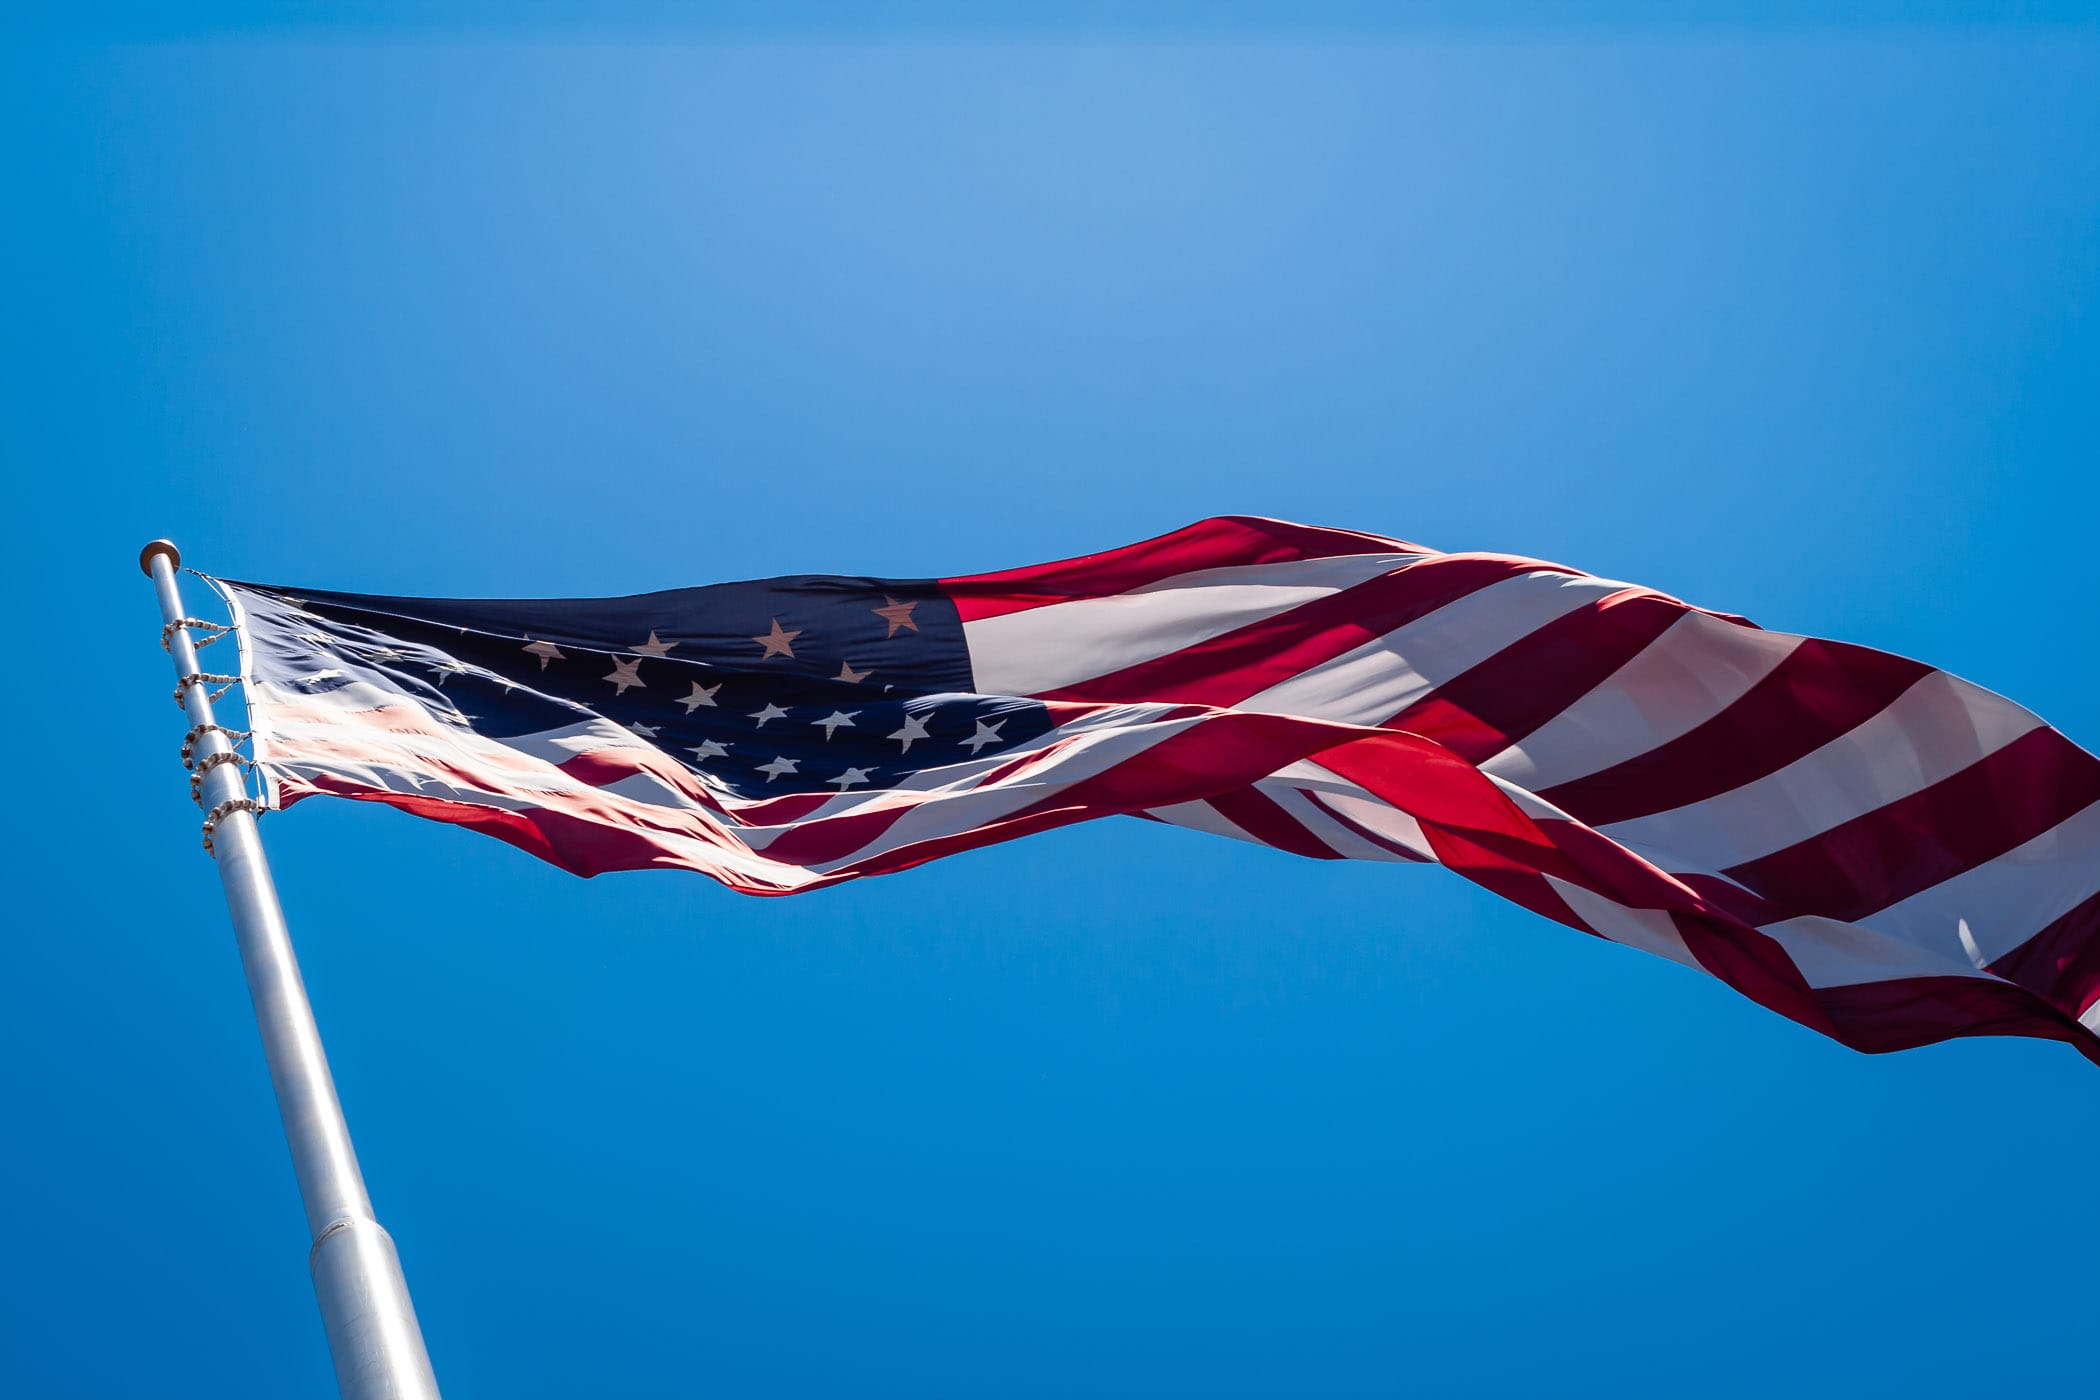 An American flag flies over Plano, Texas.